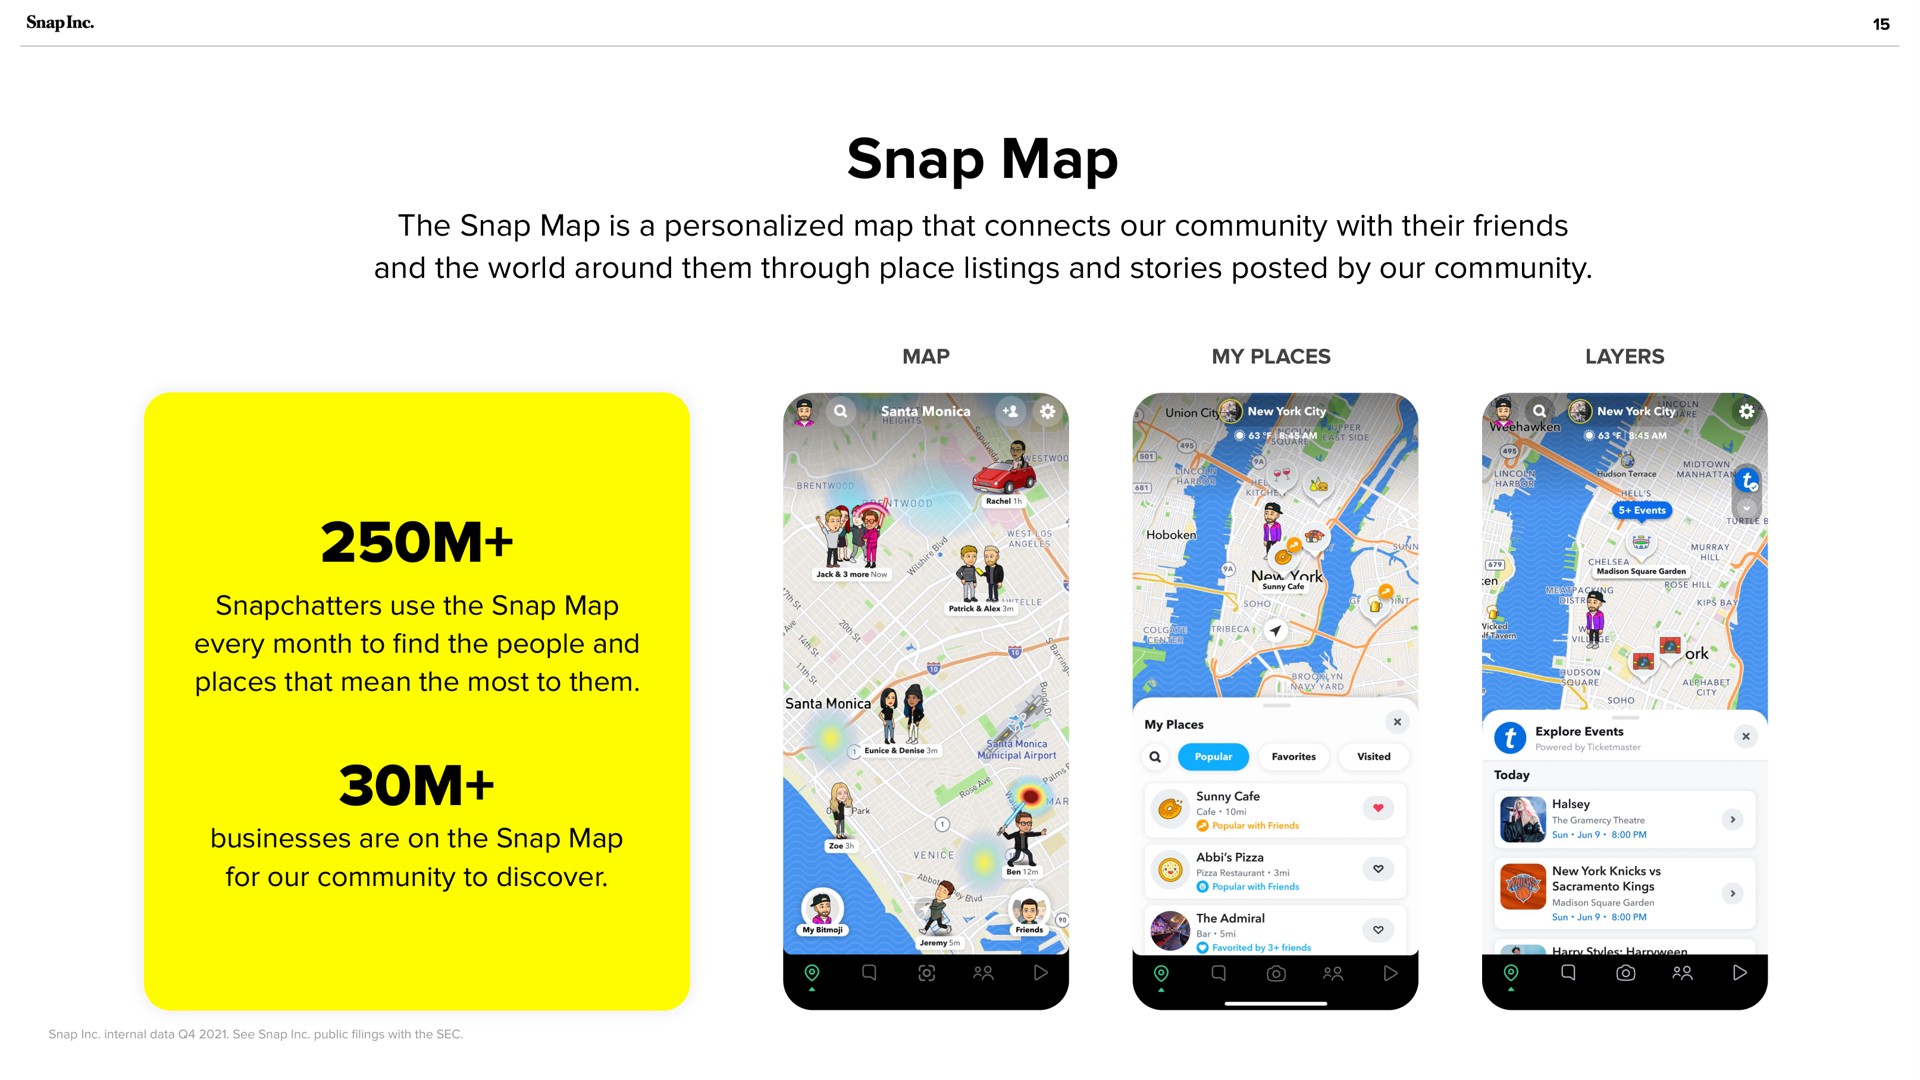 snap map as a ses | Snap Inc